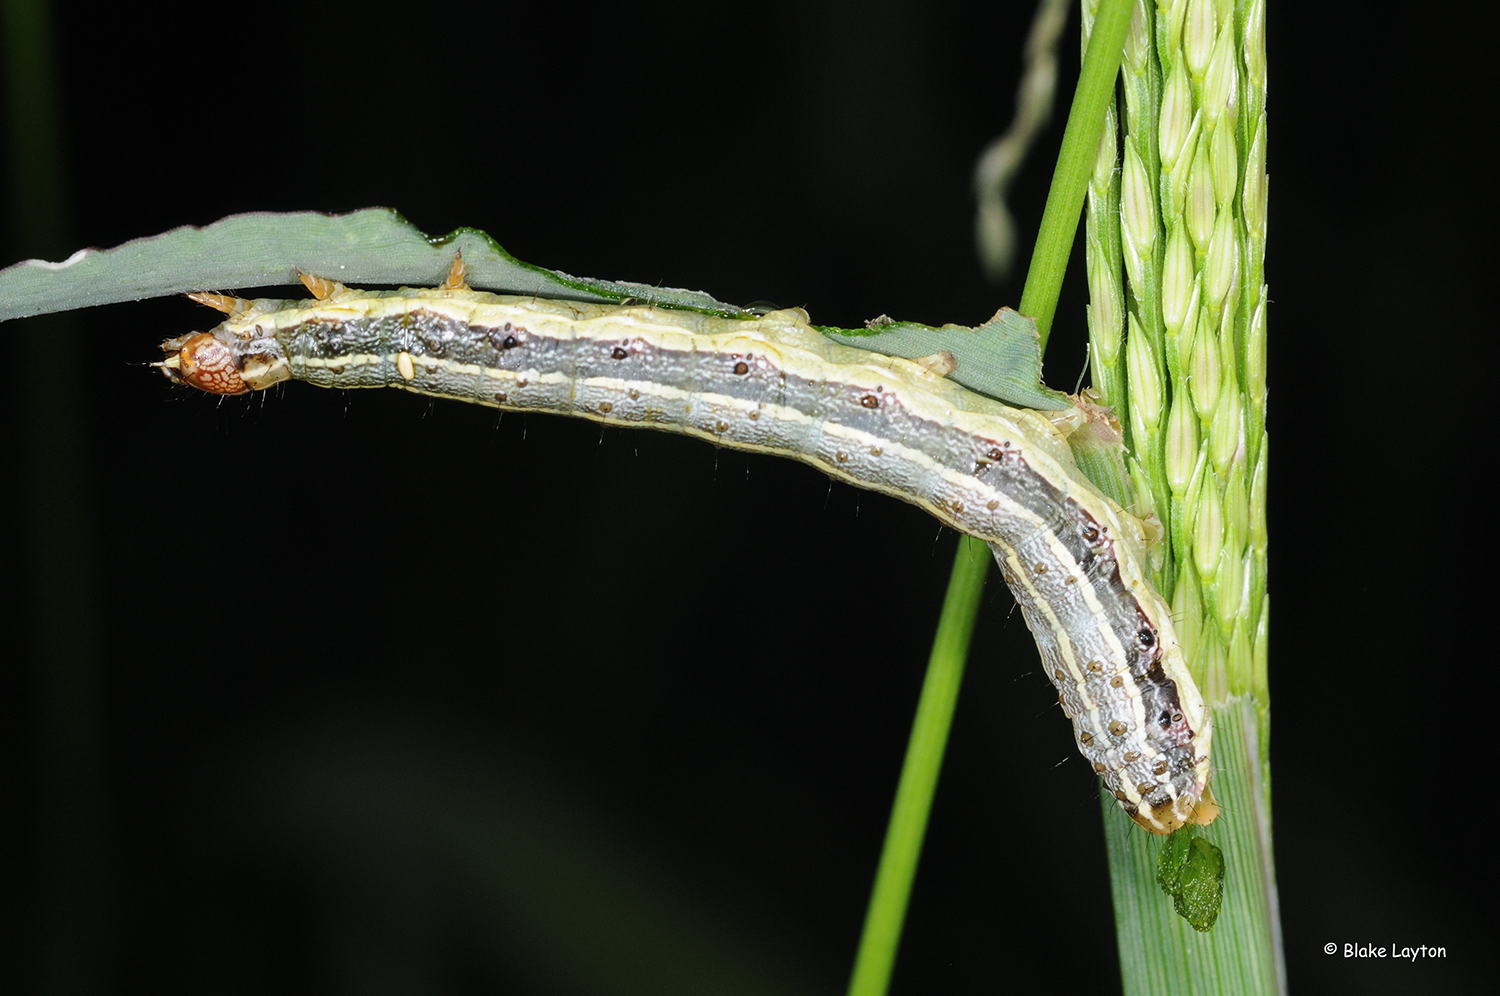 A fall armyworm on a green stalk.